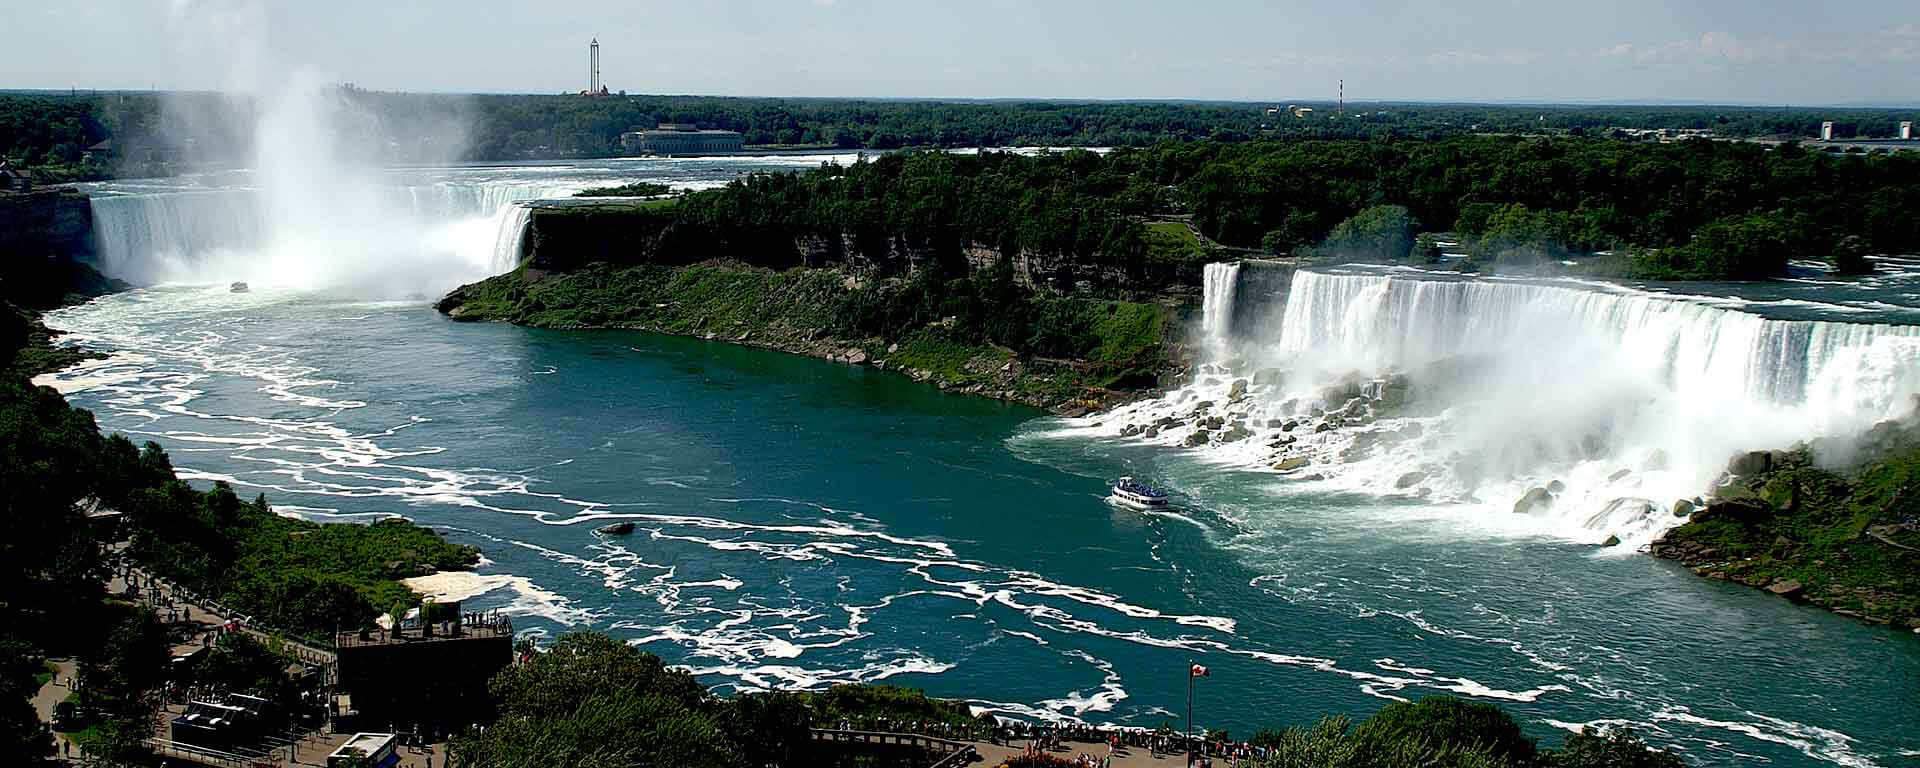 Niagara Falls Tour Packages